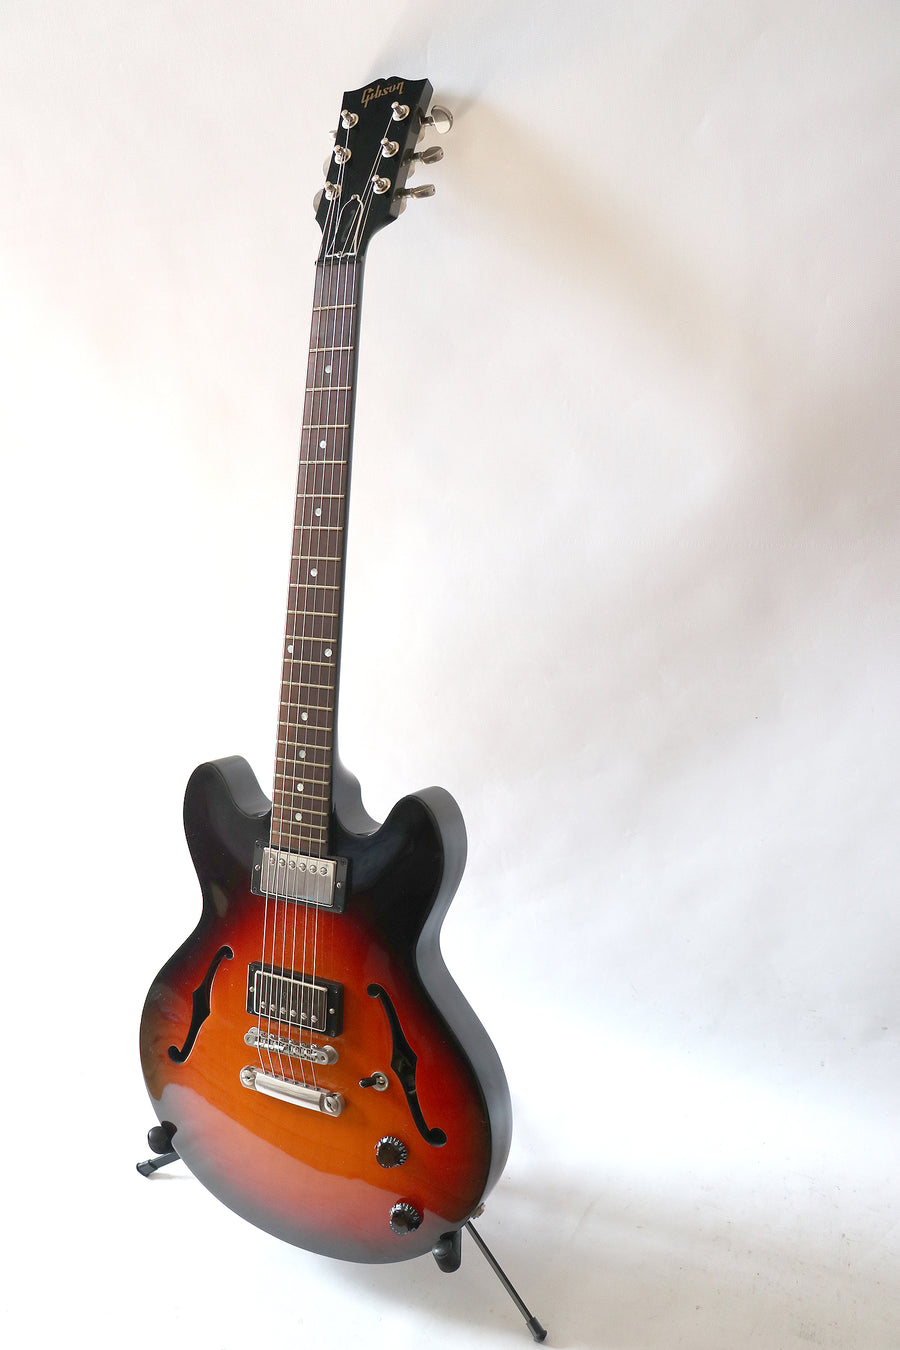 Gibson ES-339 Studio 2016 – The Guitar Colonel